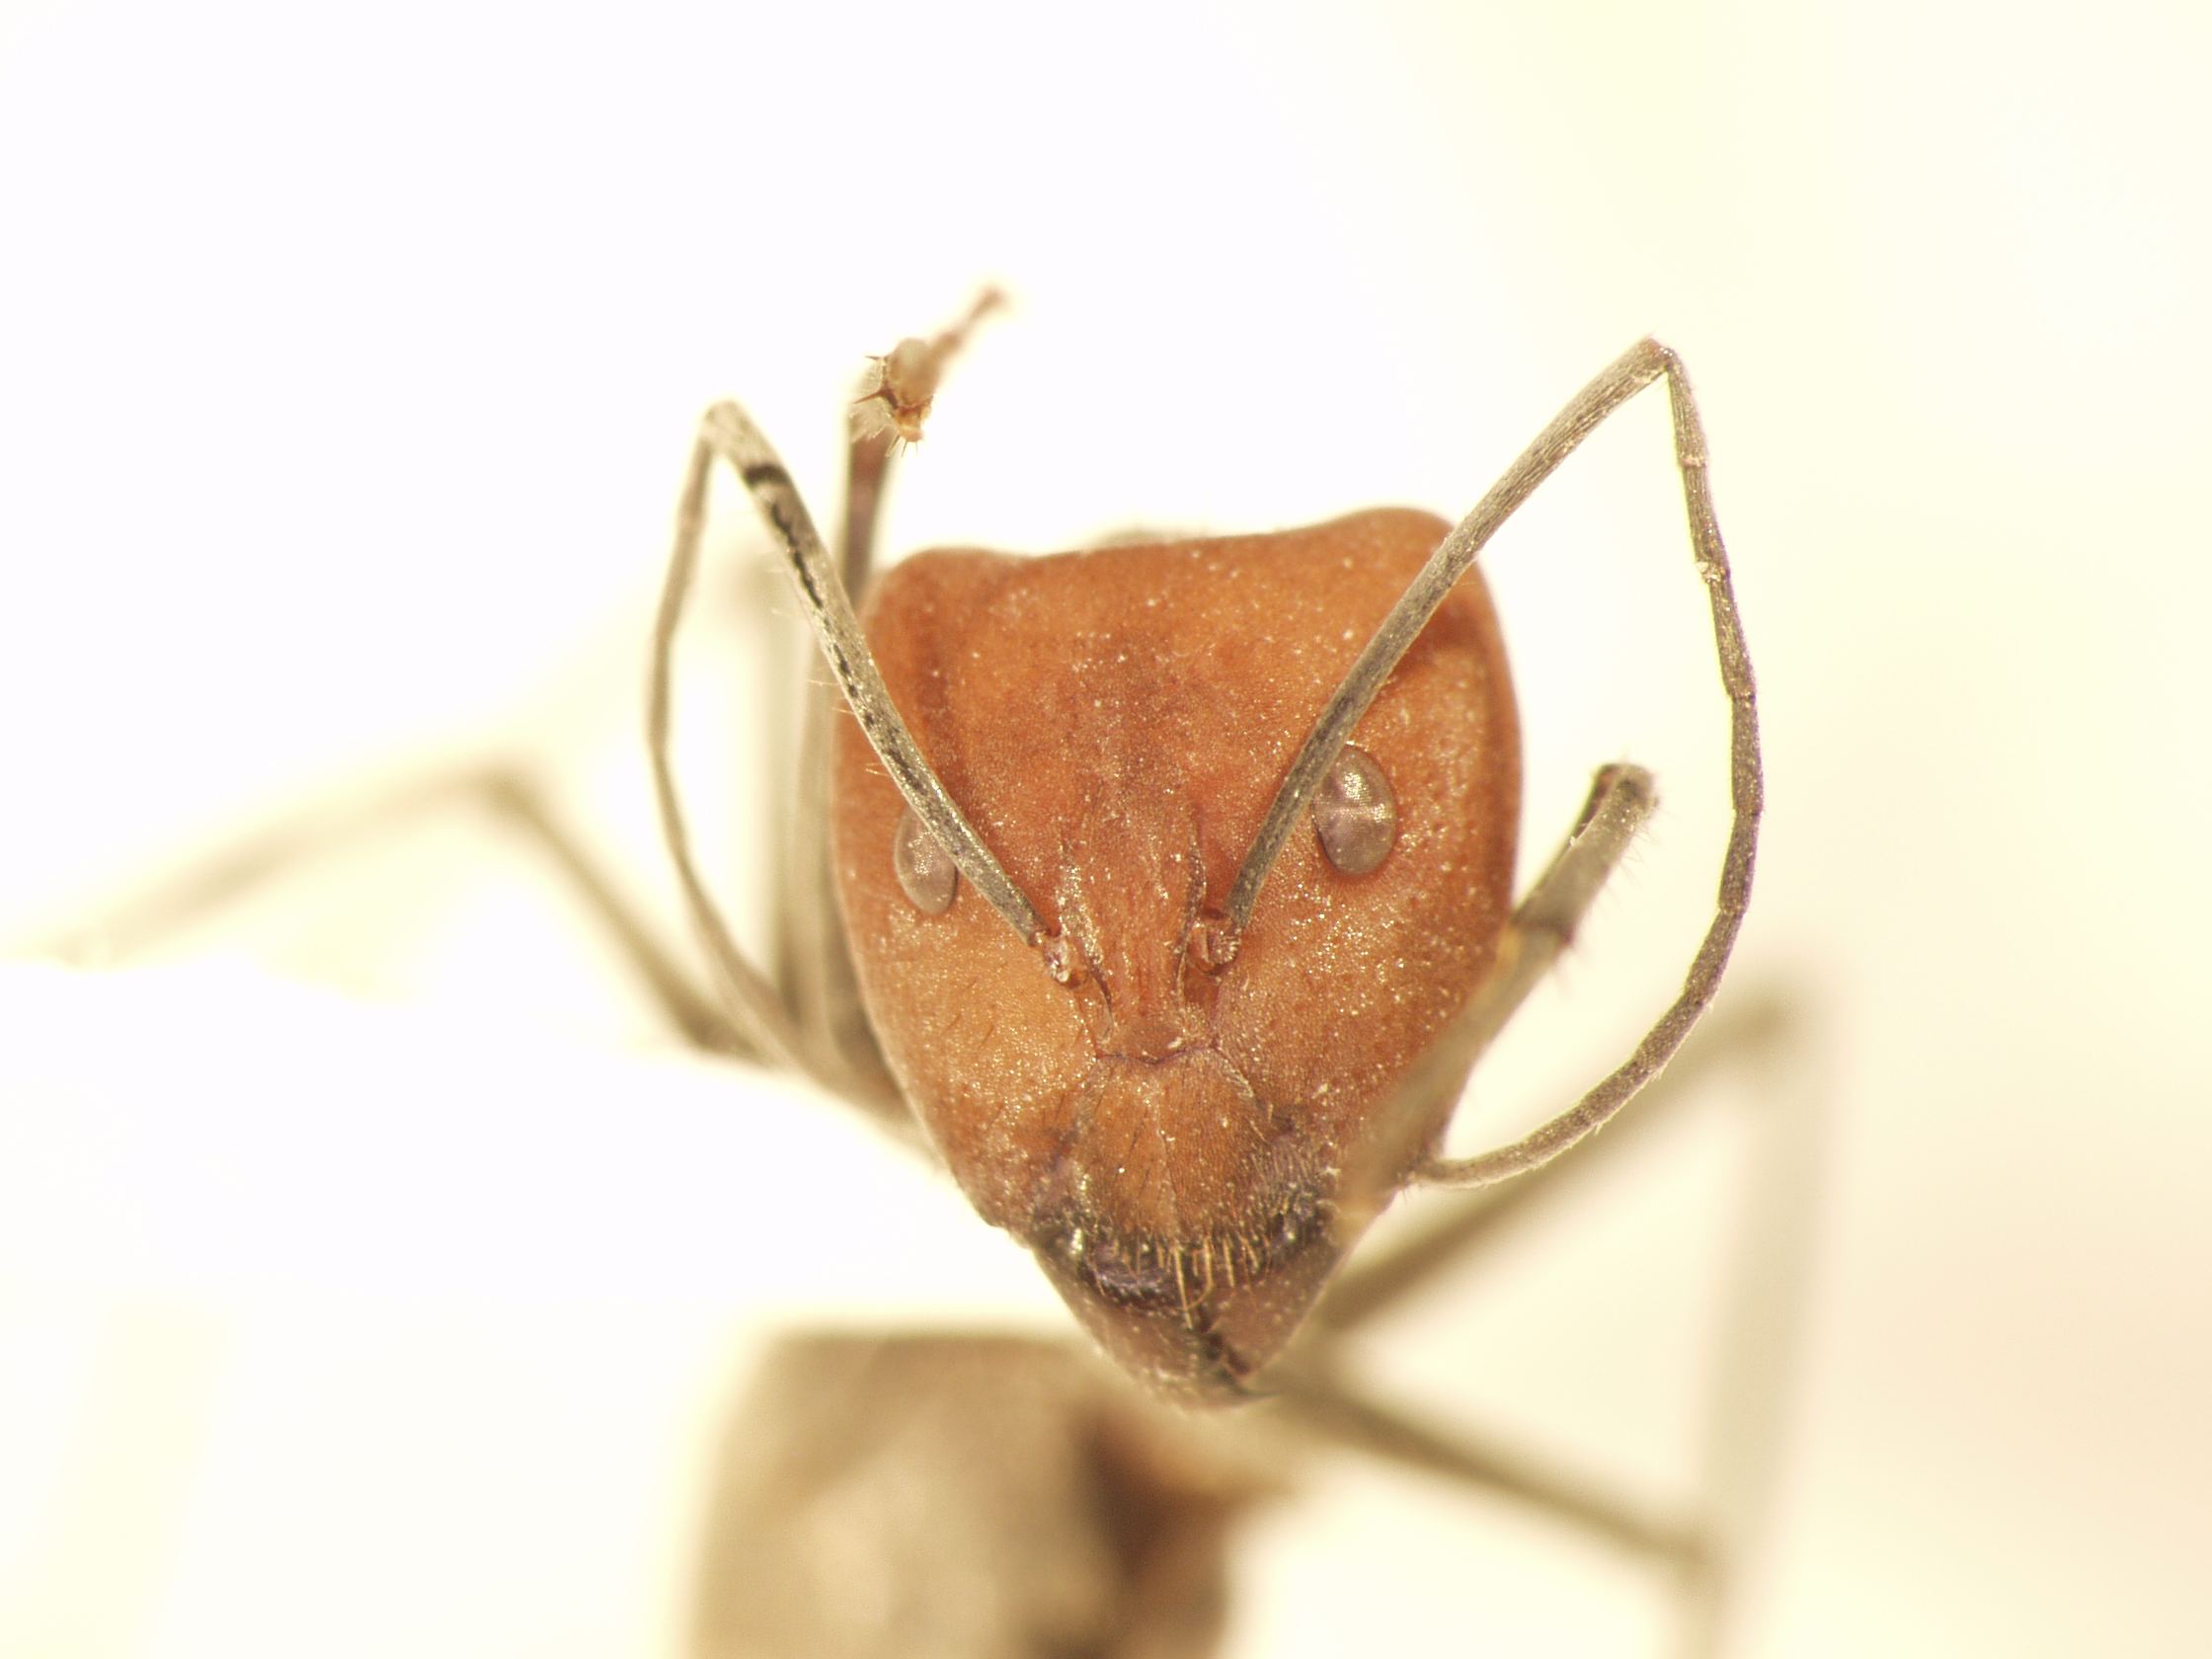 Camponotus 28 frontal